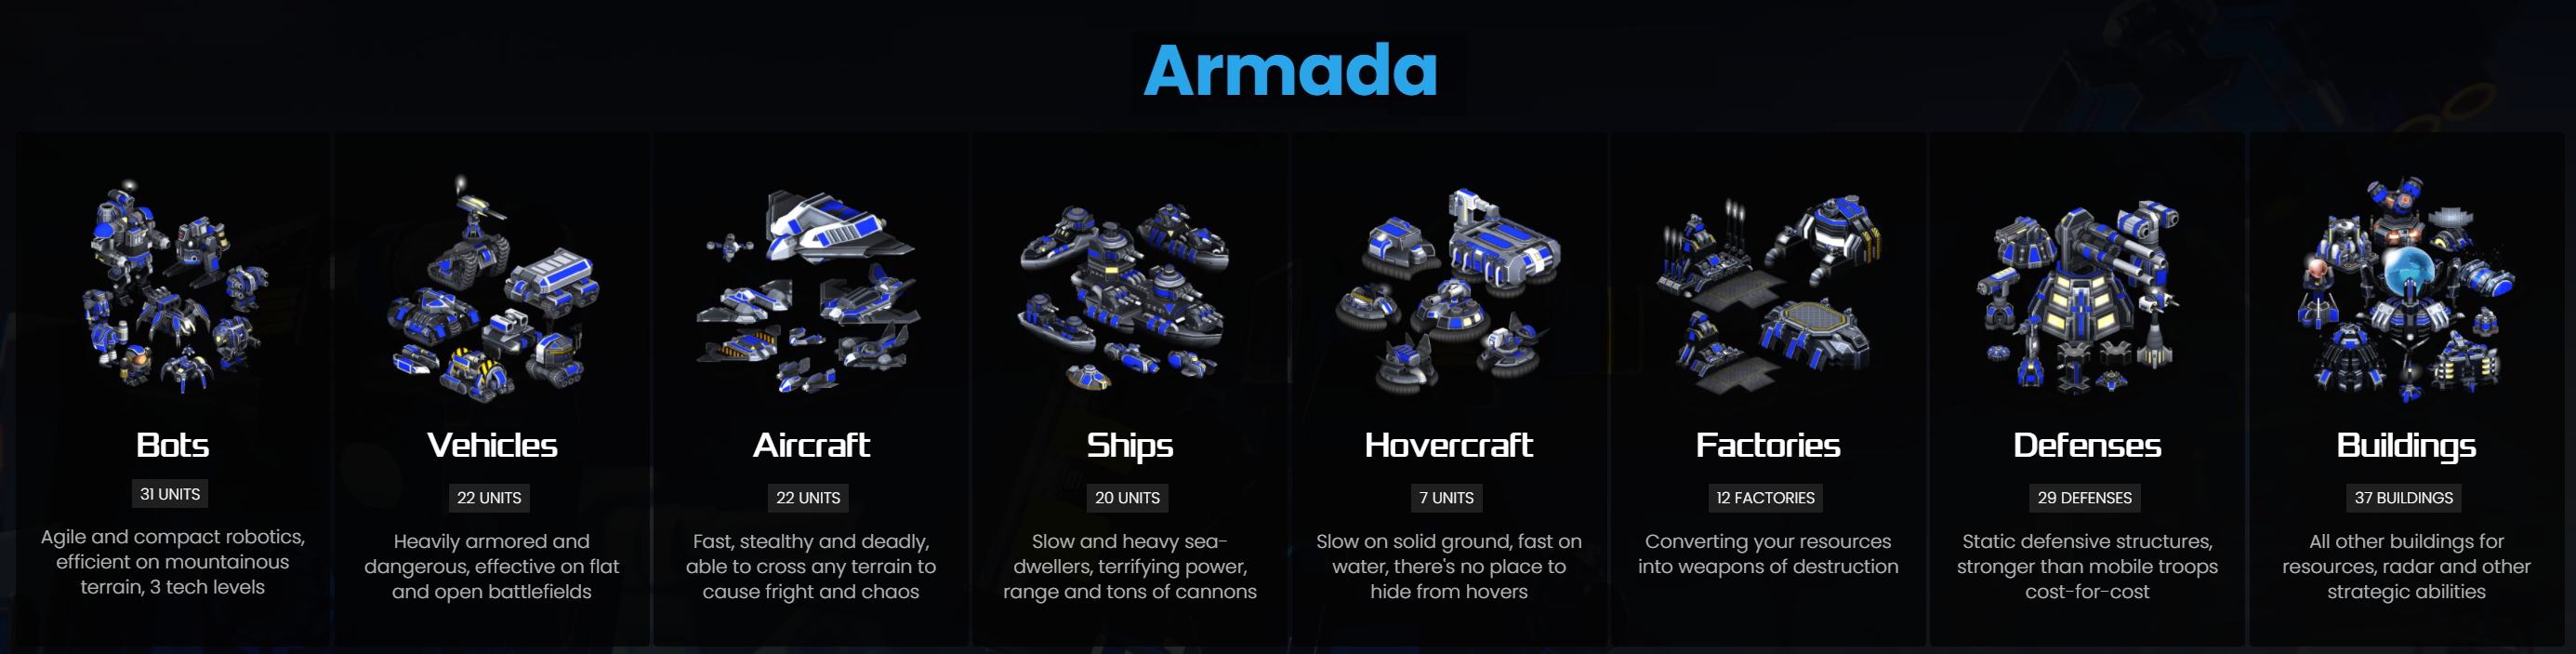 2021 09 23 13 35 40 Armada Facti